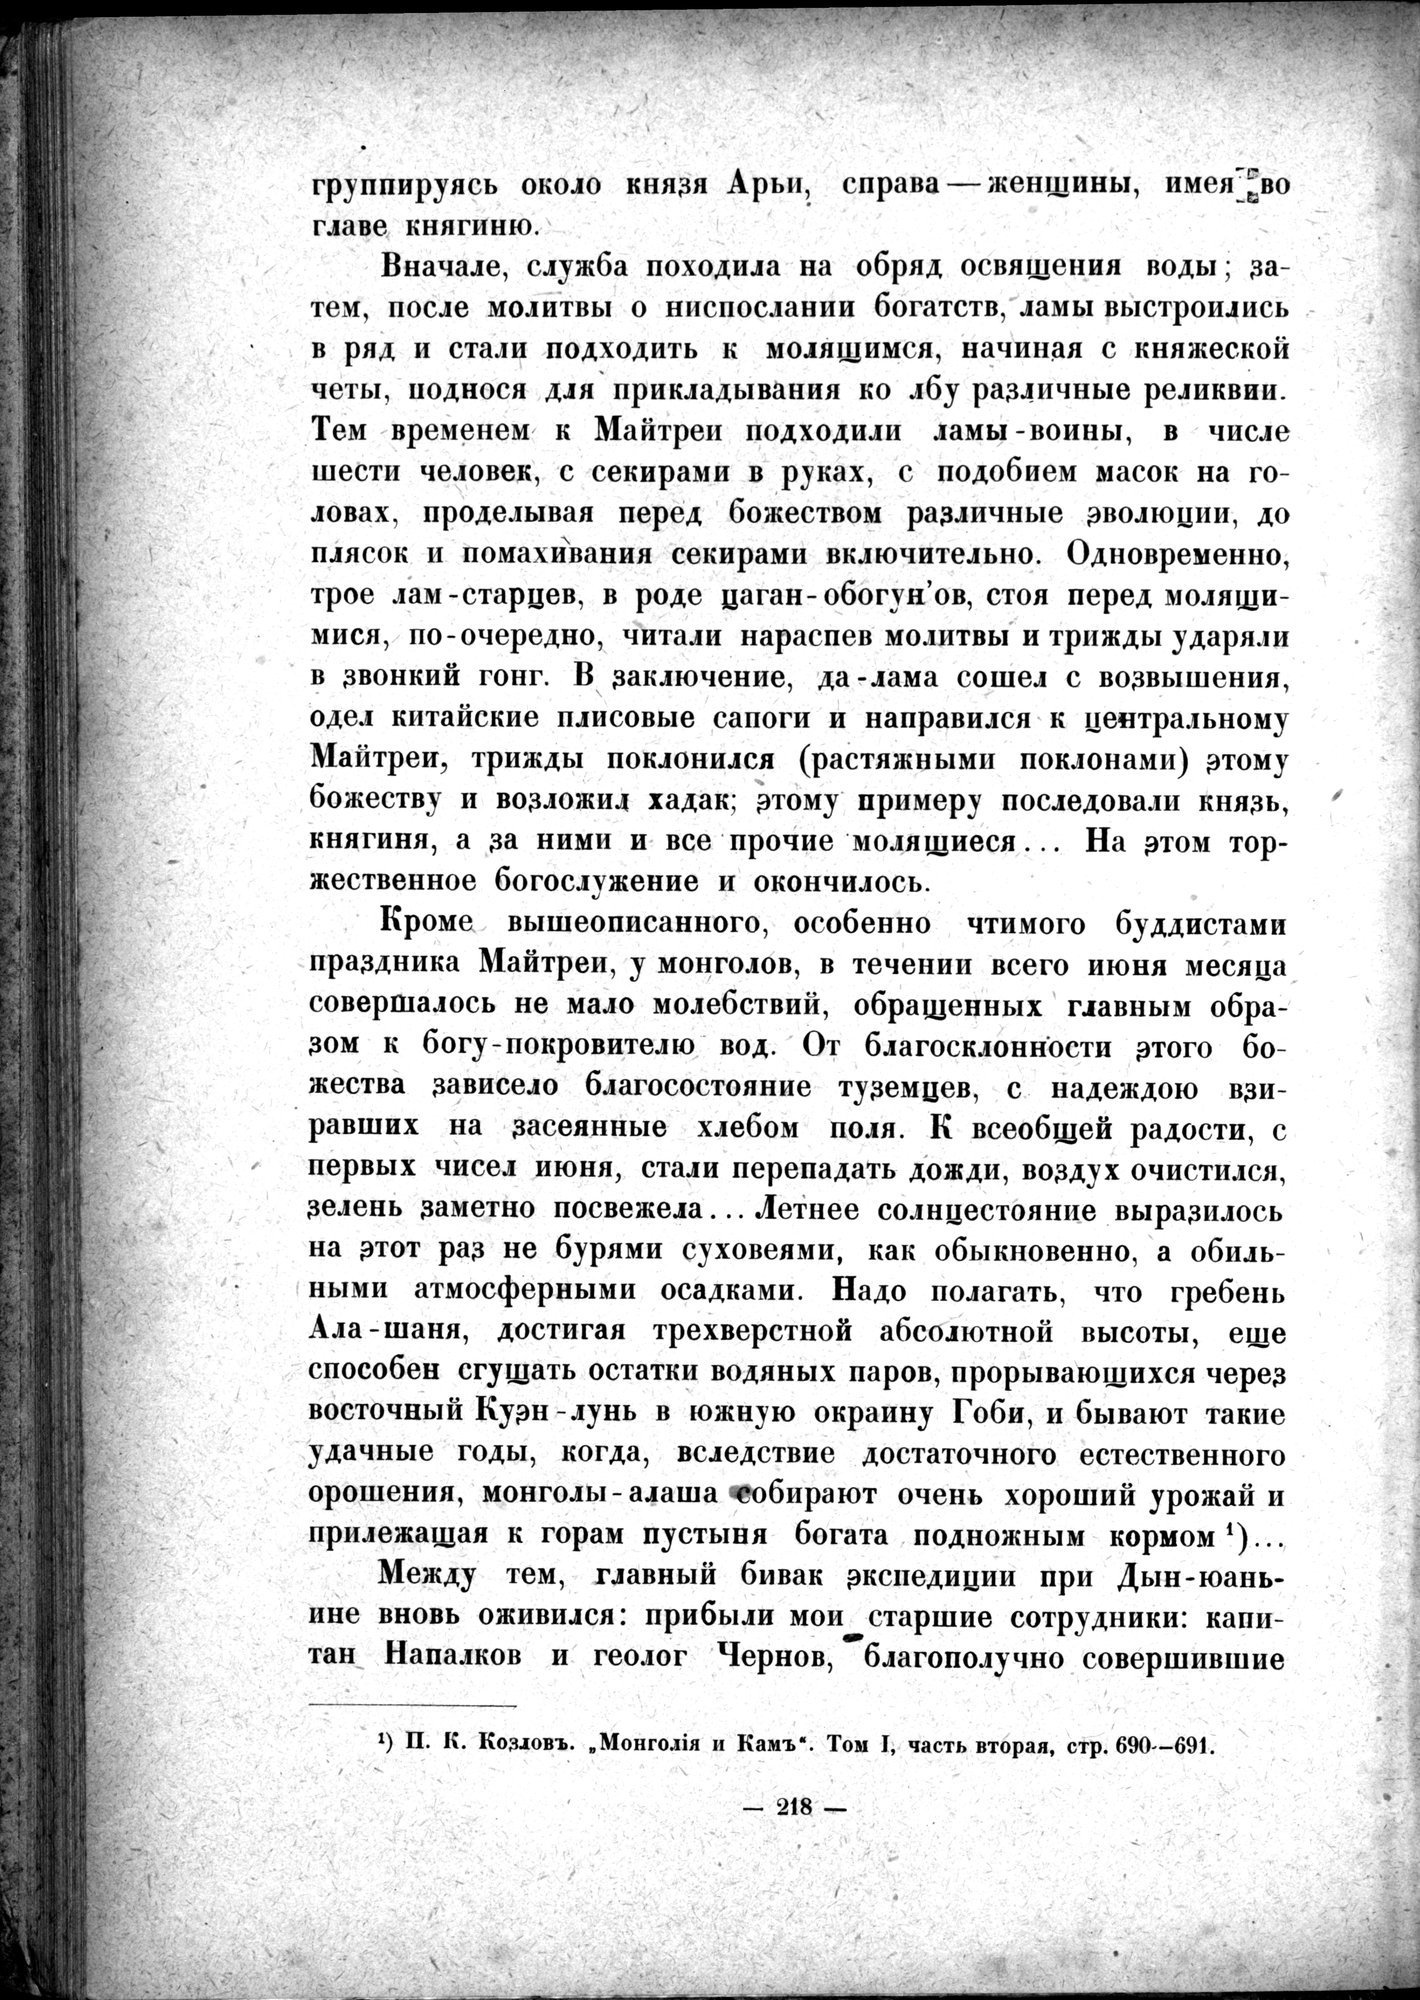 Mongoliya i Amdo i mertby gorod Khara-Khoto : vol.1 / Page 262 (Grayscale High Resolution Image)